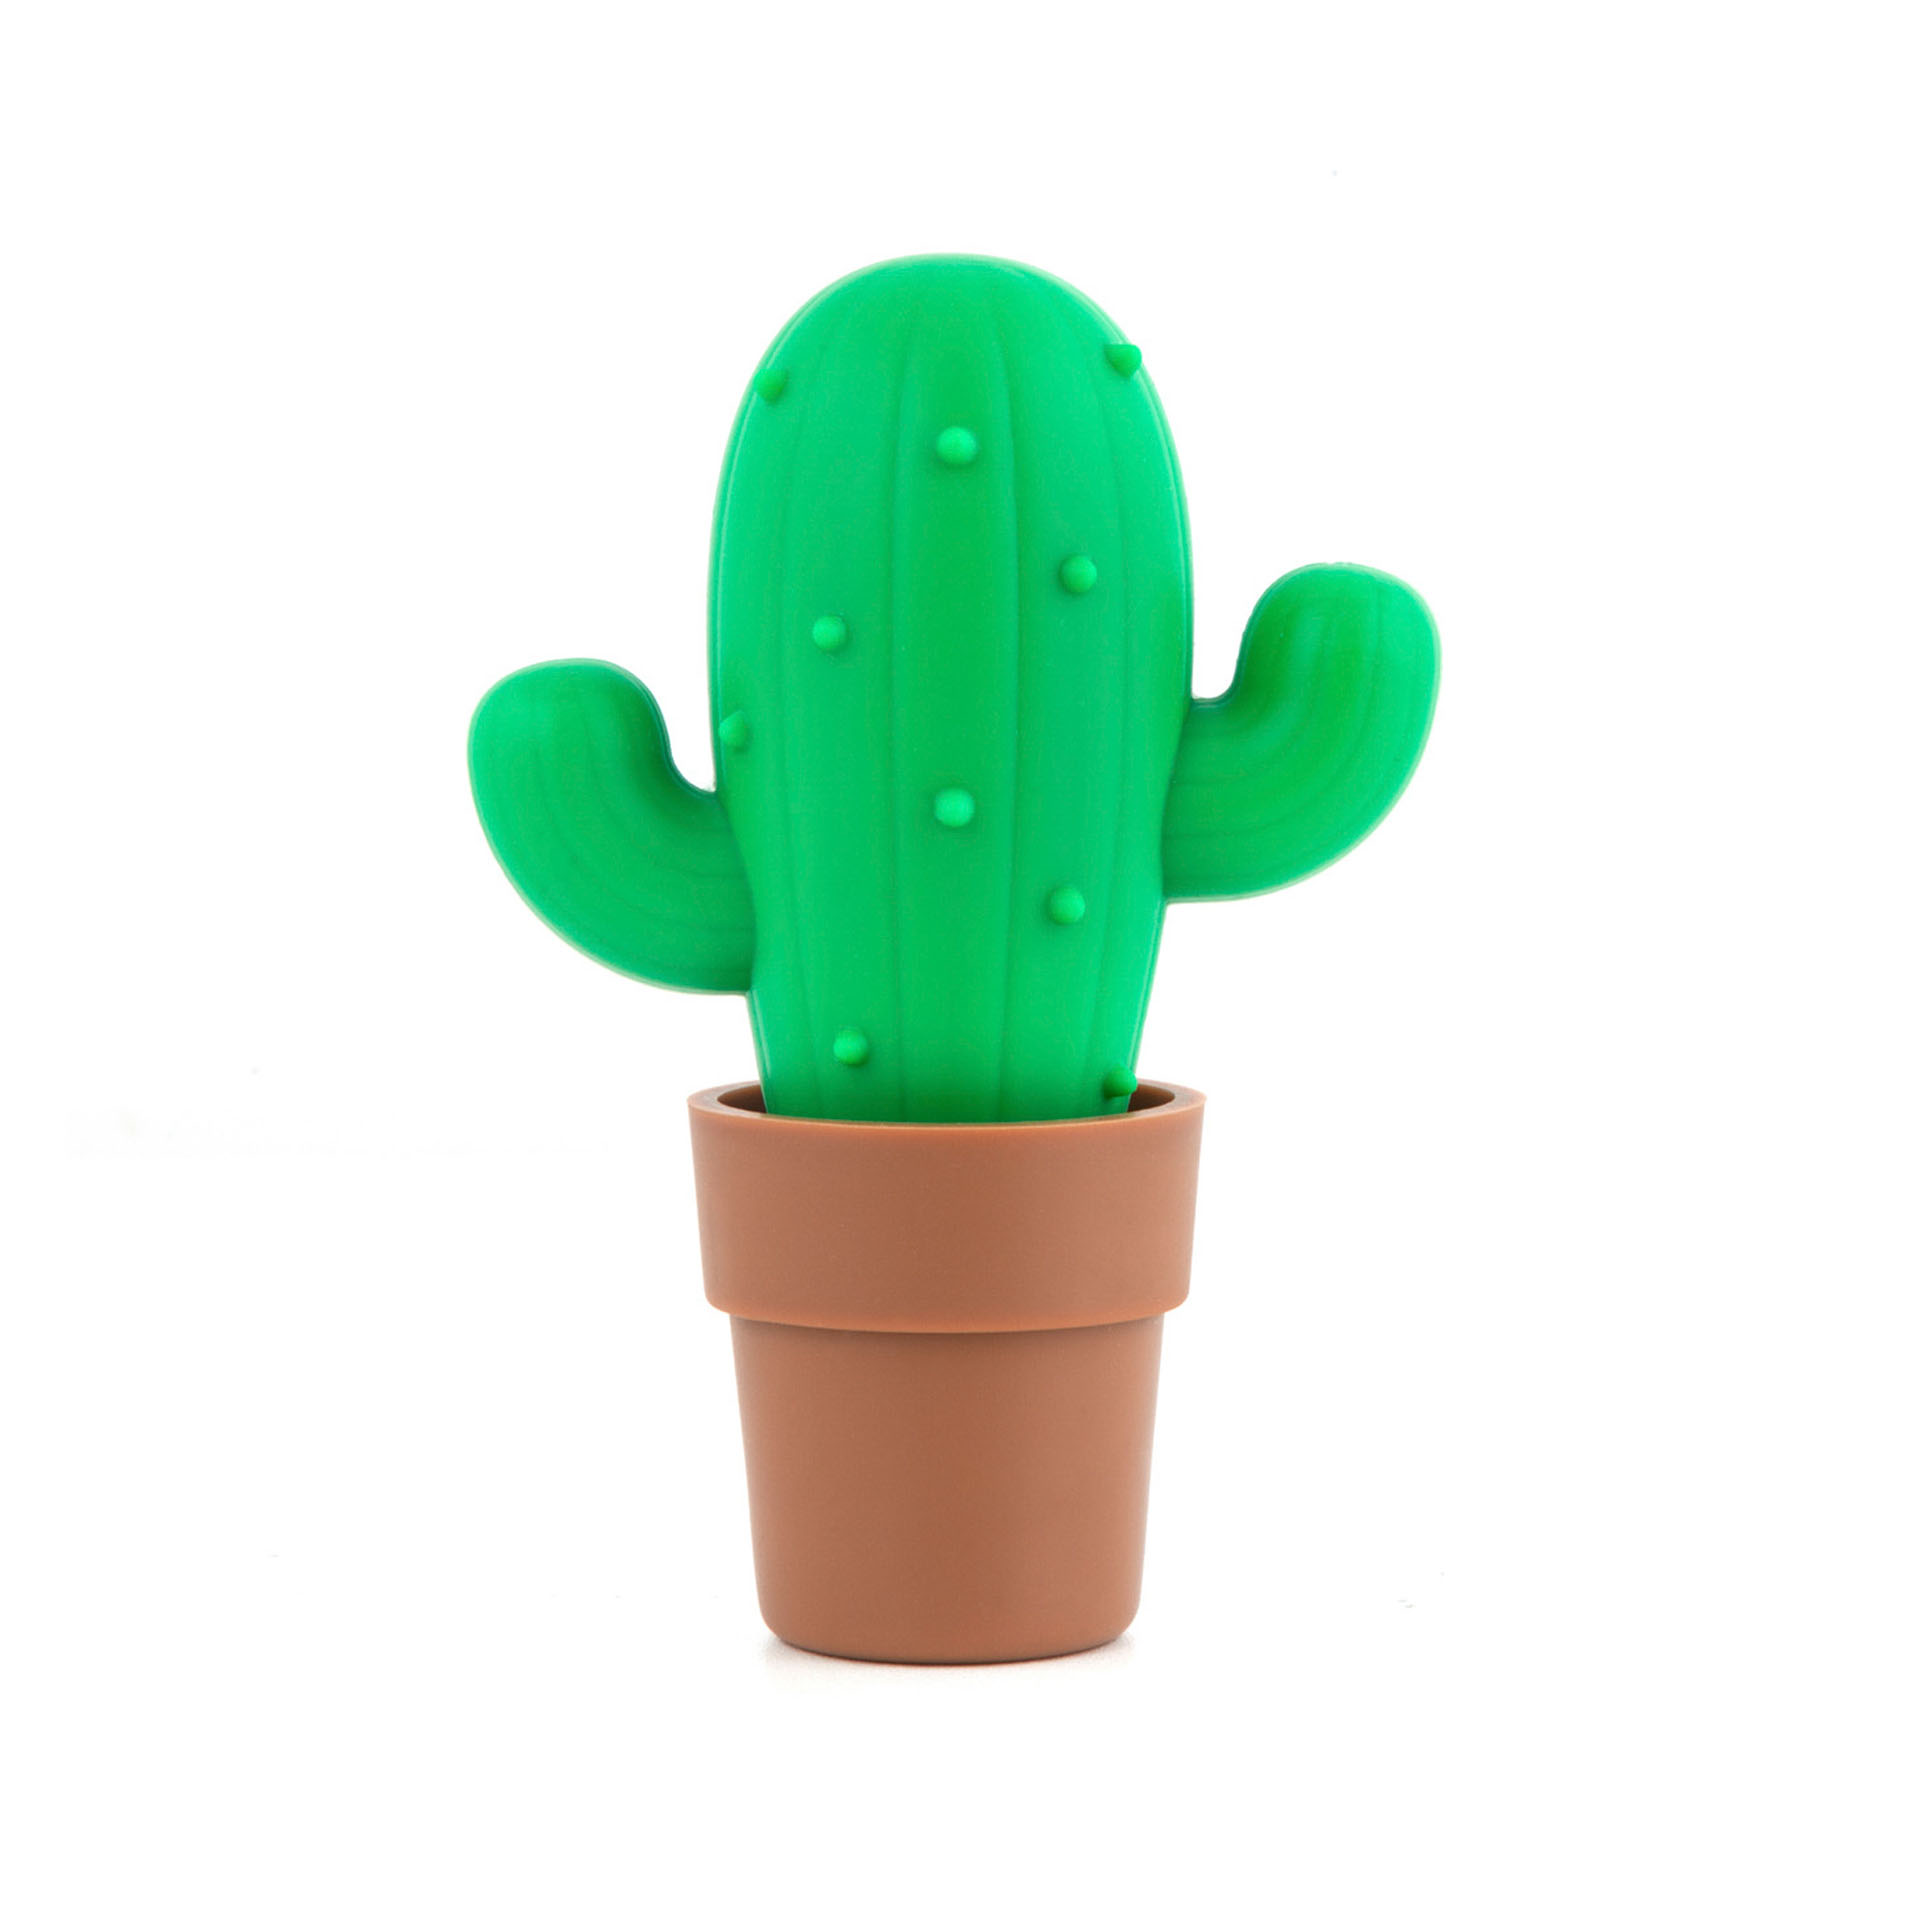 Separa tuorlo a forma di cactus, , large